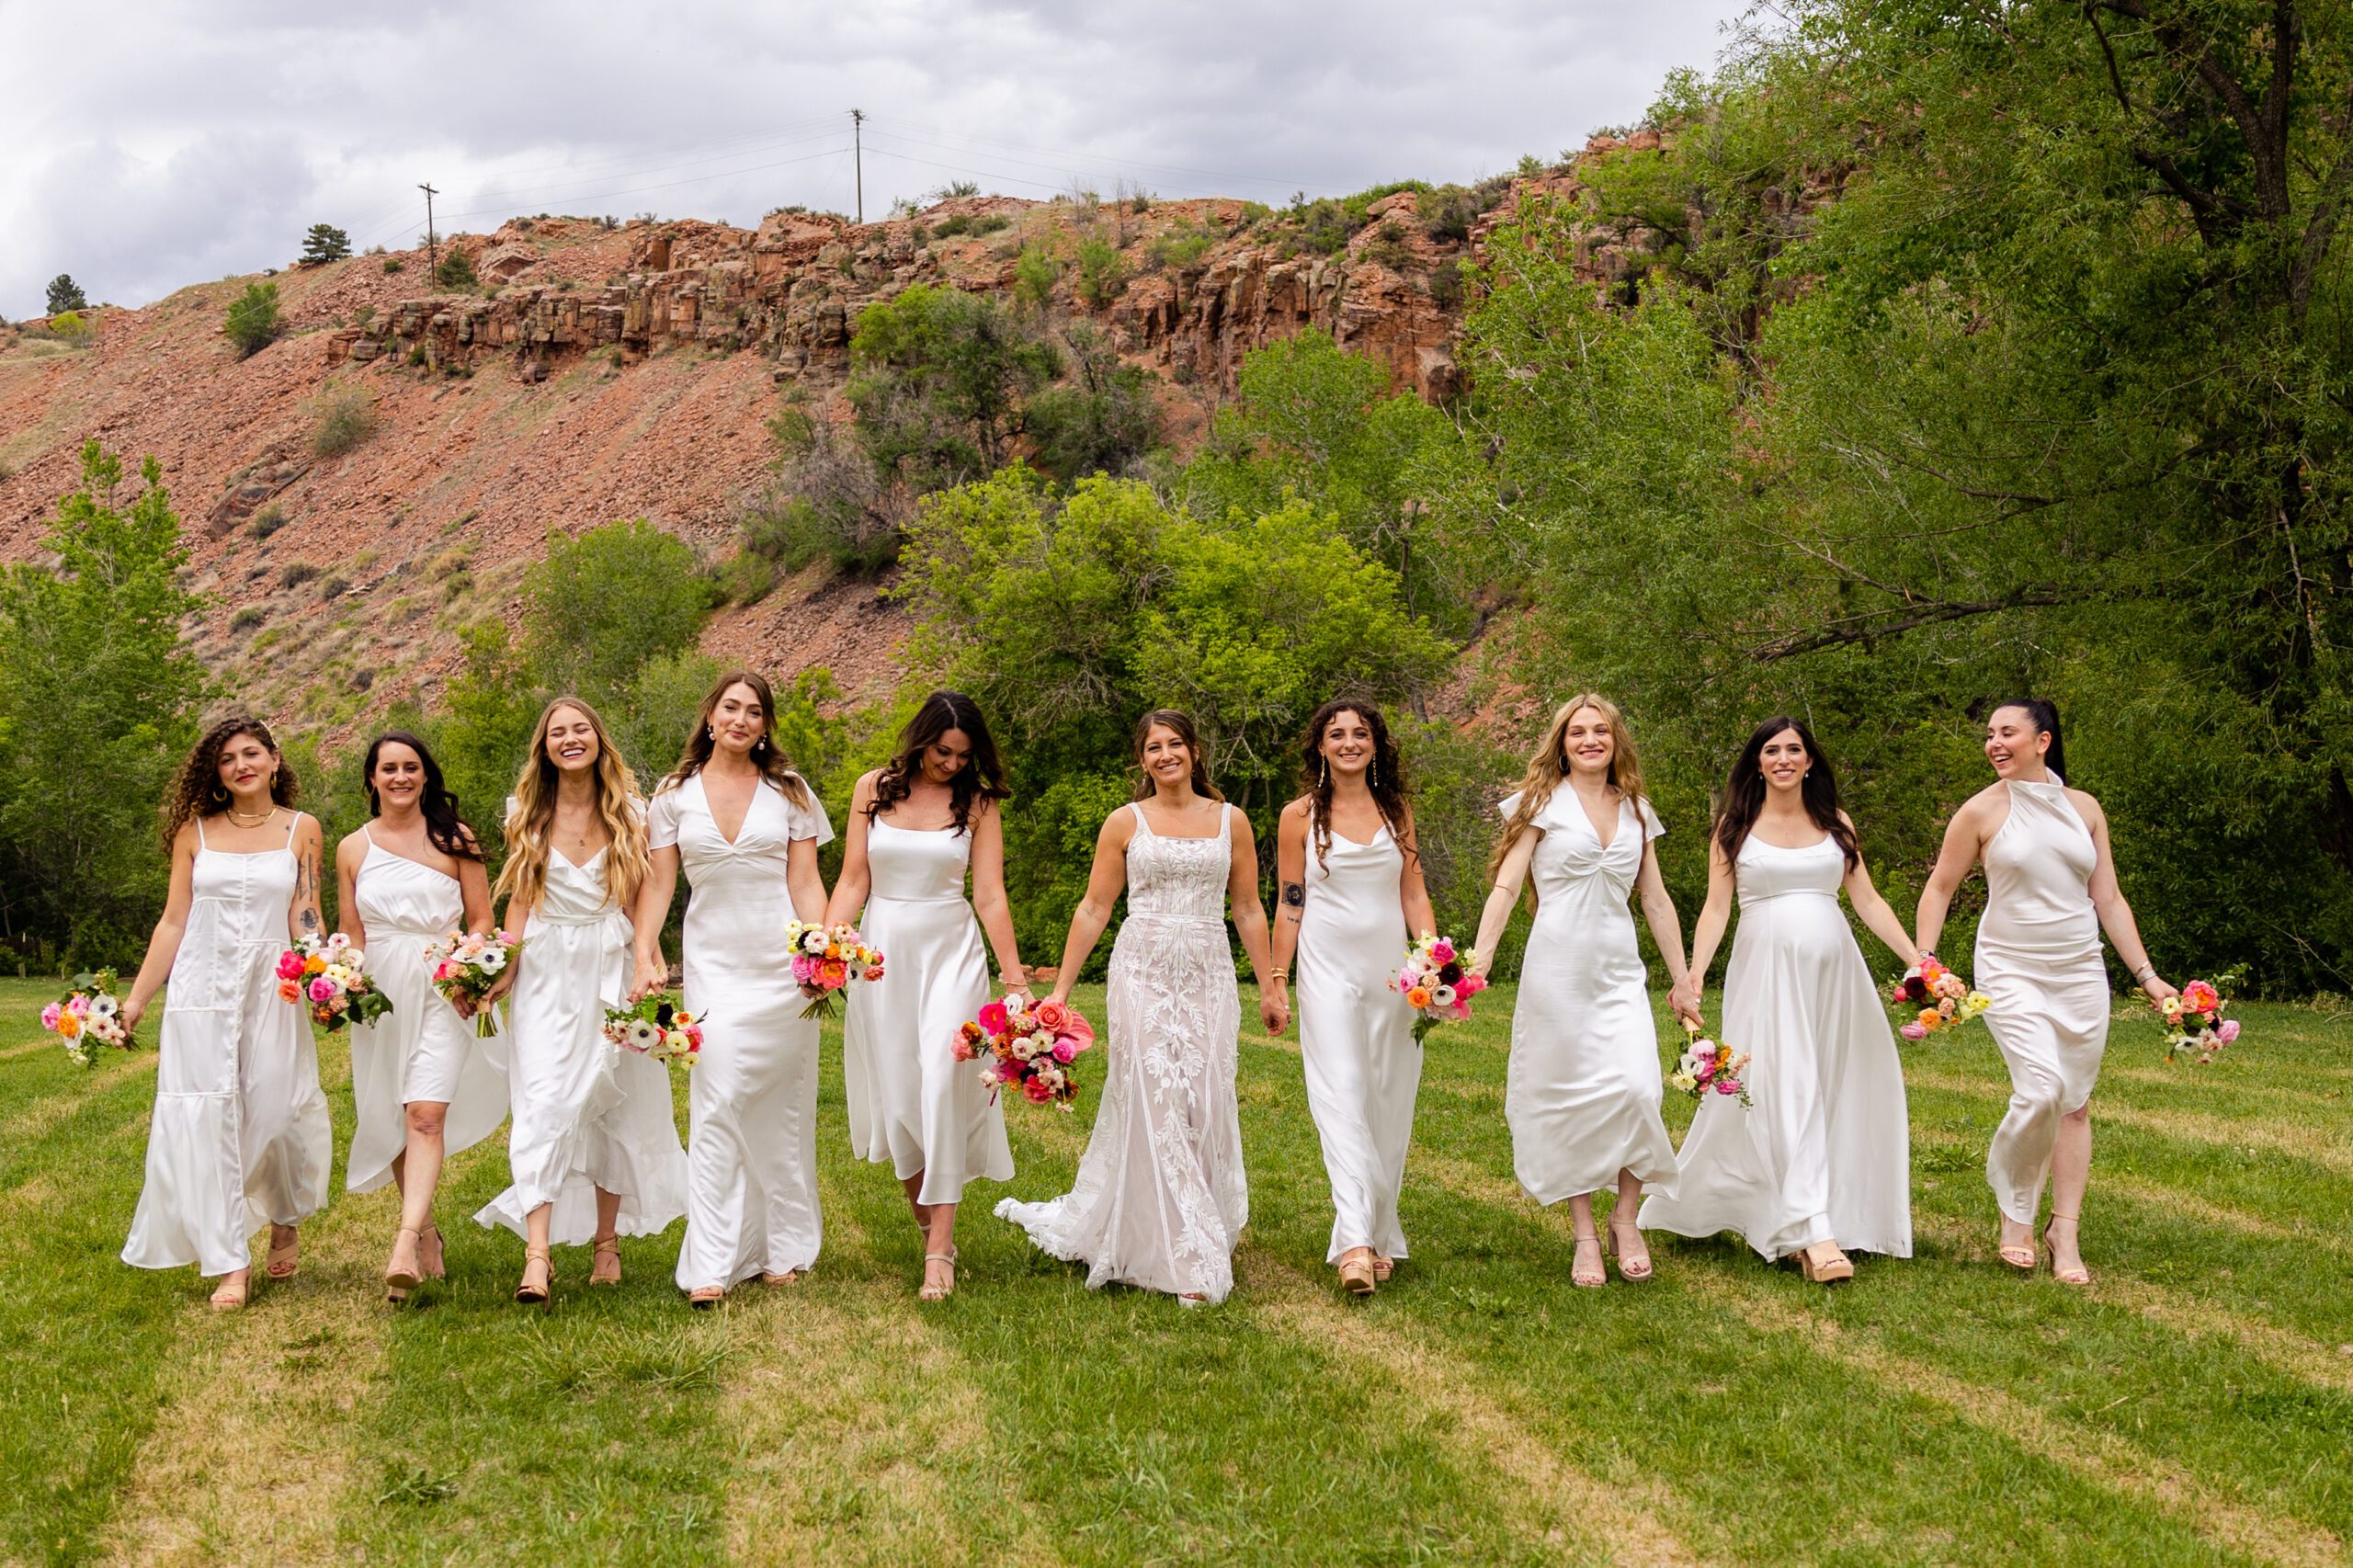 Bridesmaids, Bridesmaids dresses, mix and match bridesmaids dresses, white bridesmaids dresses, ivory bridesmaids dresses, bridesmaids photos, Planet Bluegrass, Colorado wedding photographer